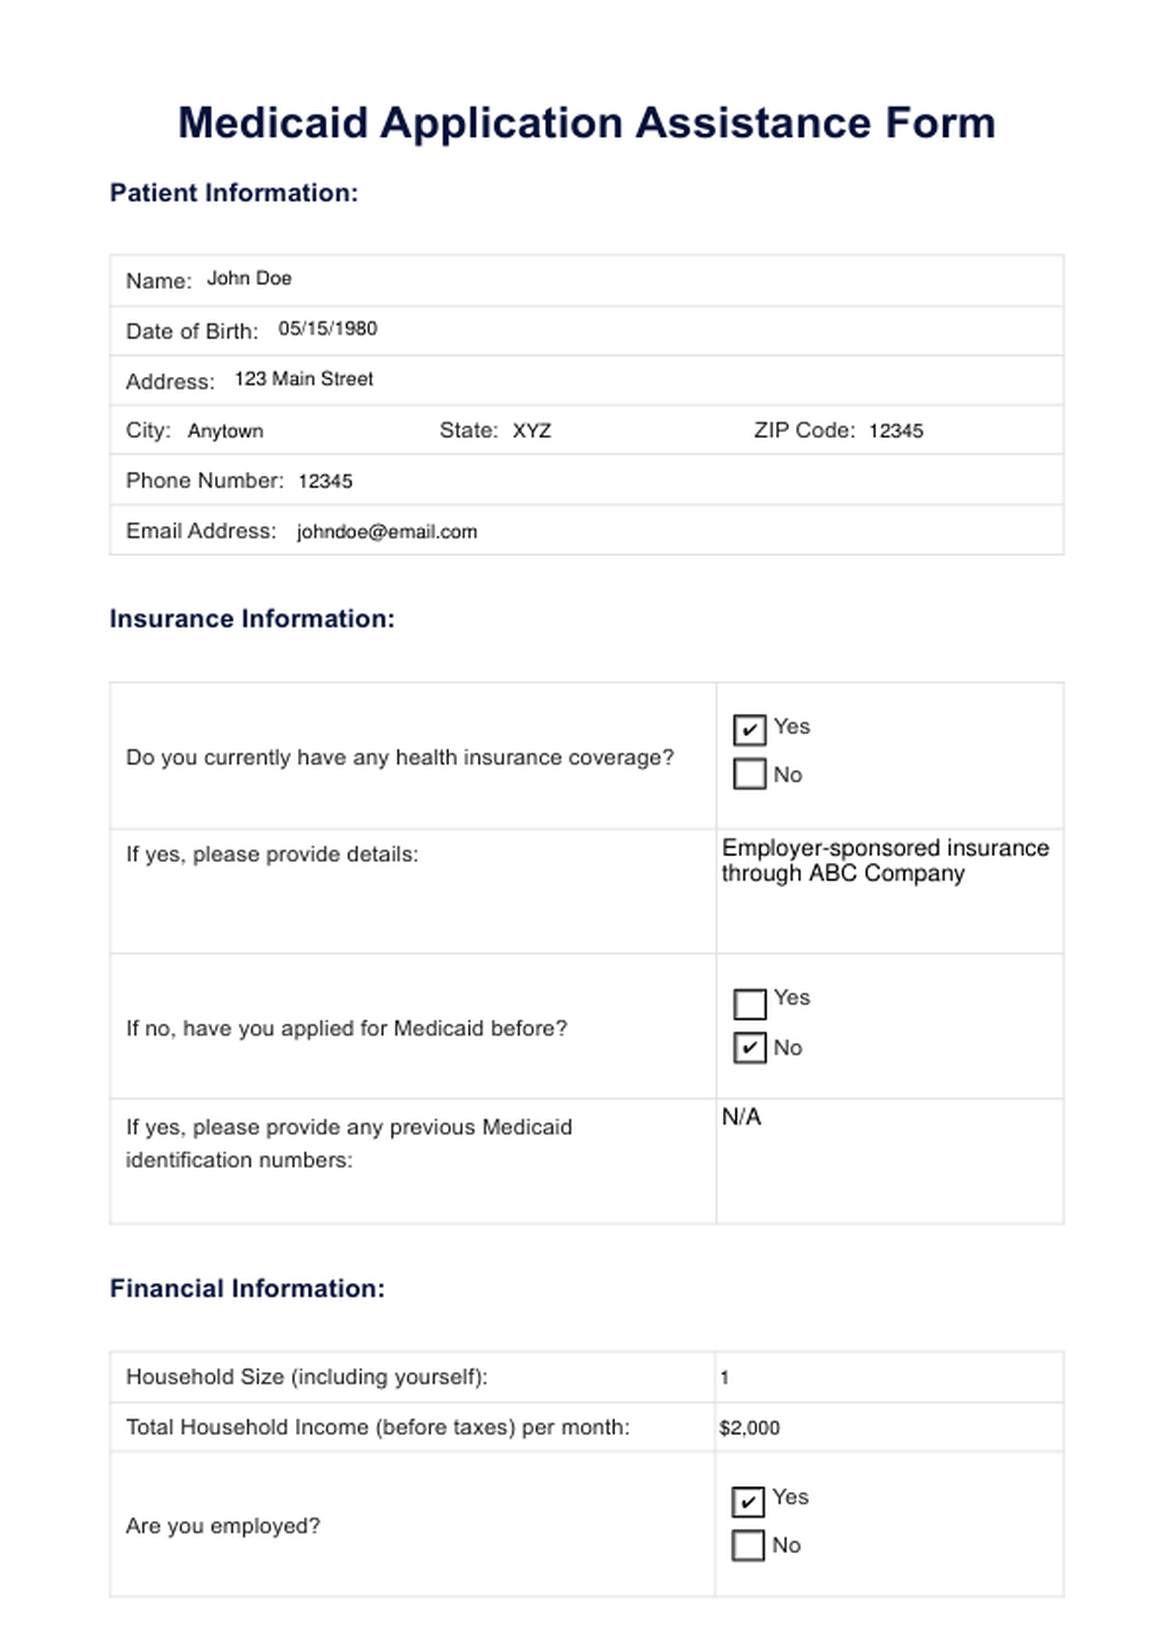 Medicaid Application Form PDF Example